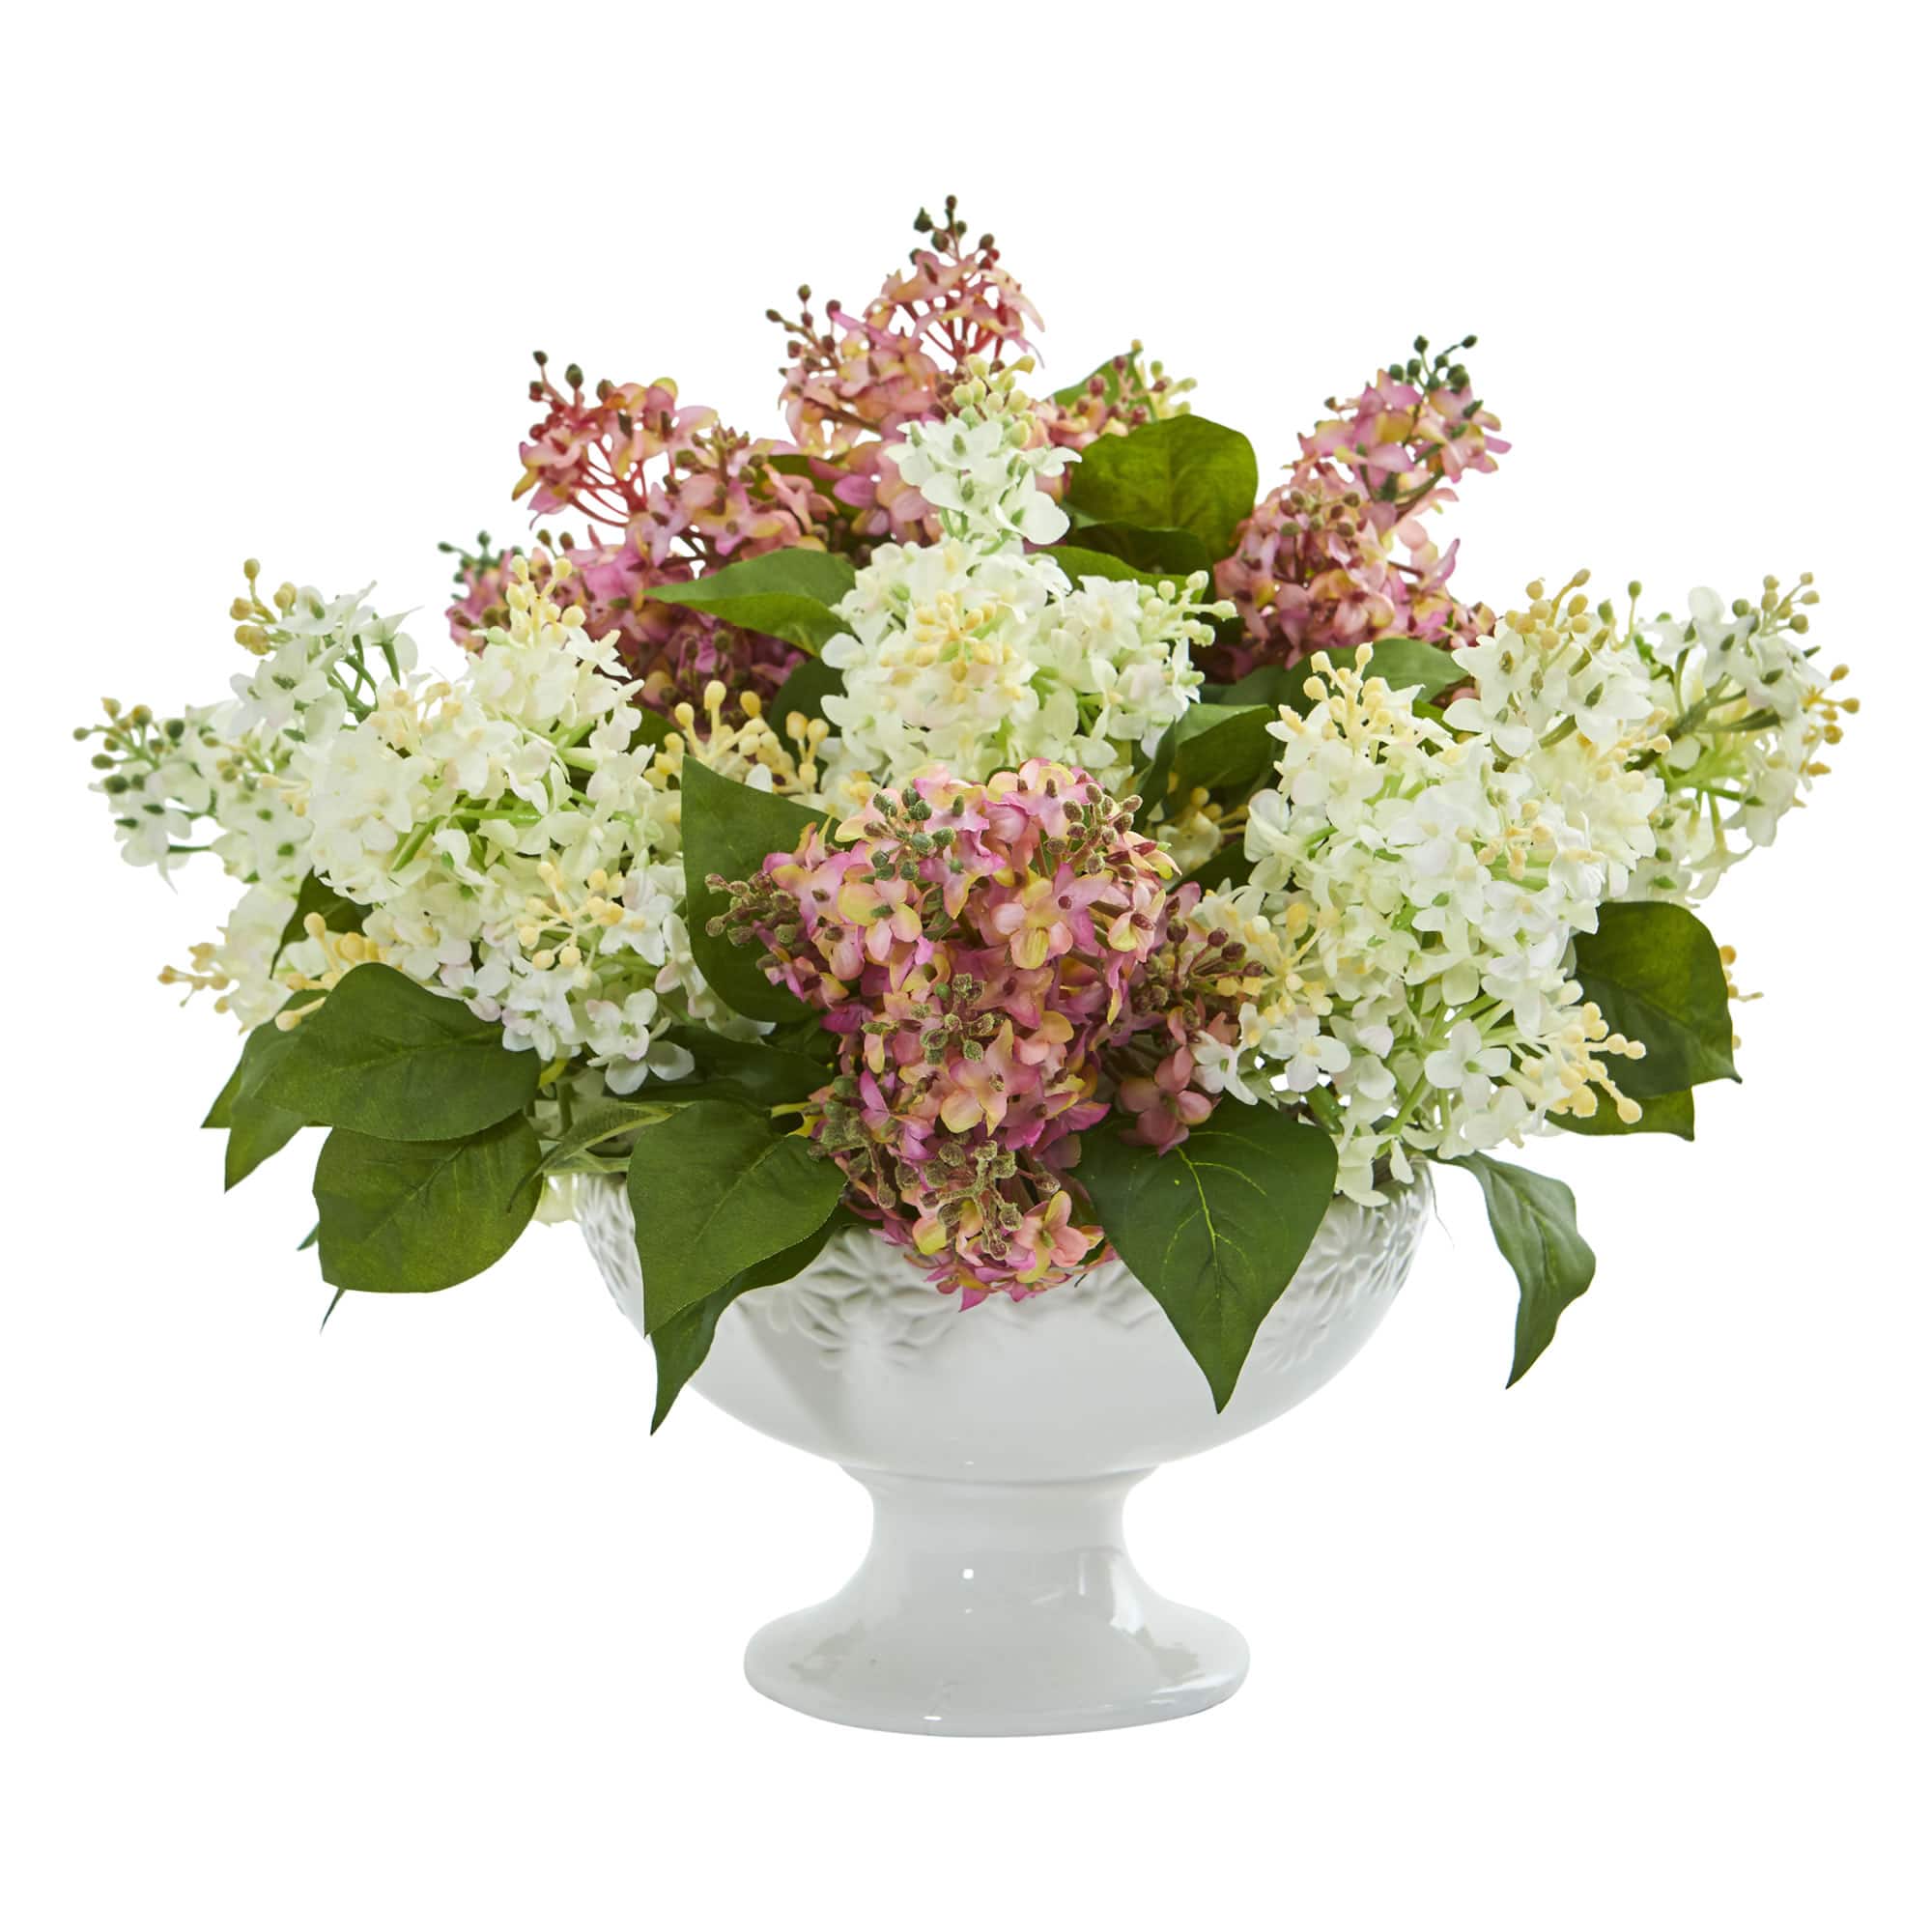 14" Lilac Arrangement in White Vase